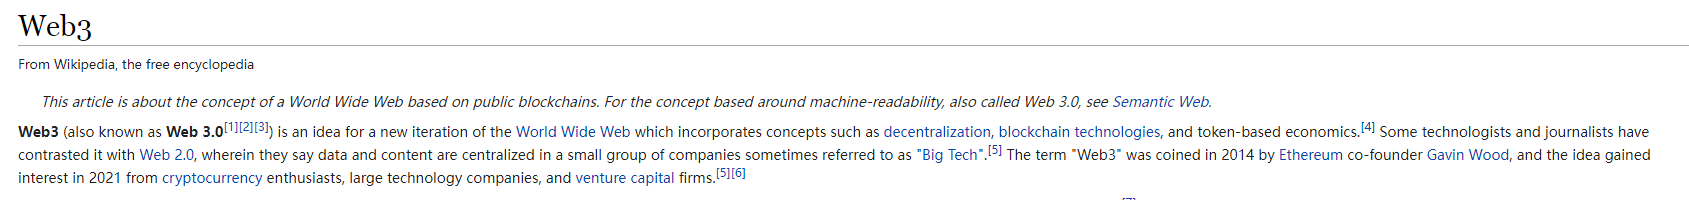 Wikipedia explains web 3.0